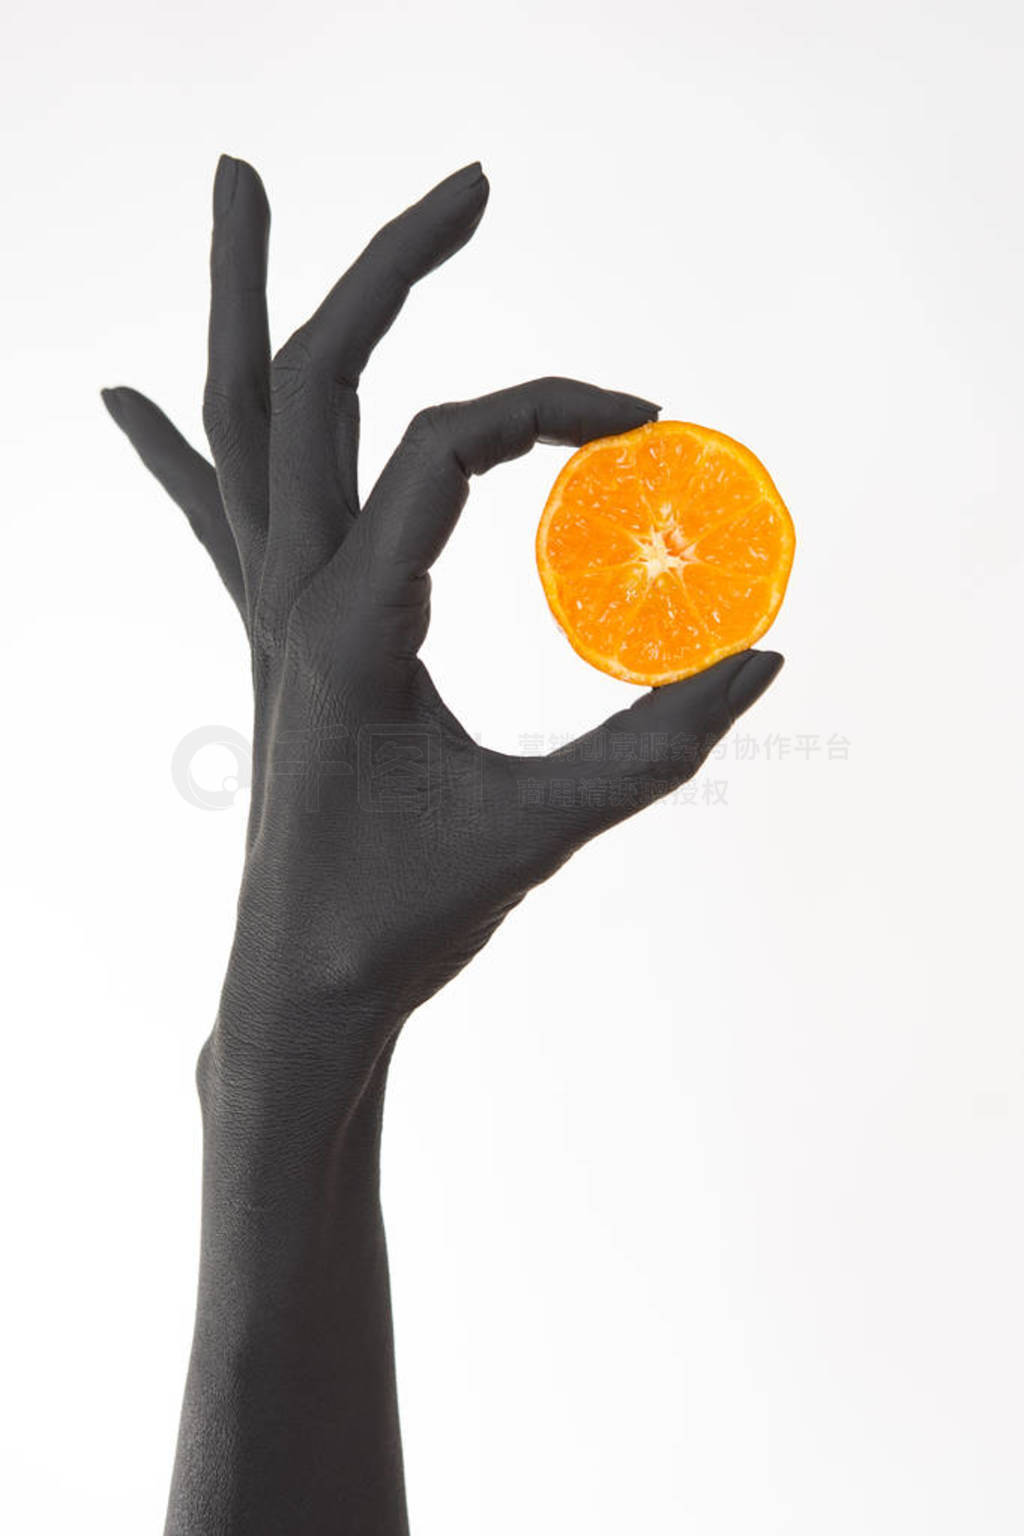 s hands holding orange halves. Black hands with bright tasty man